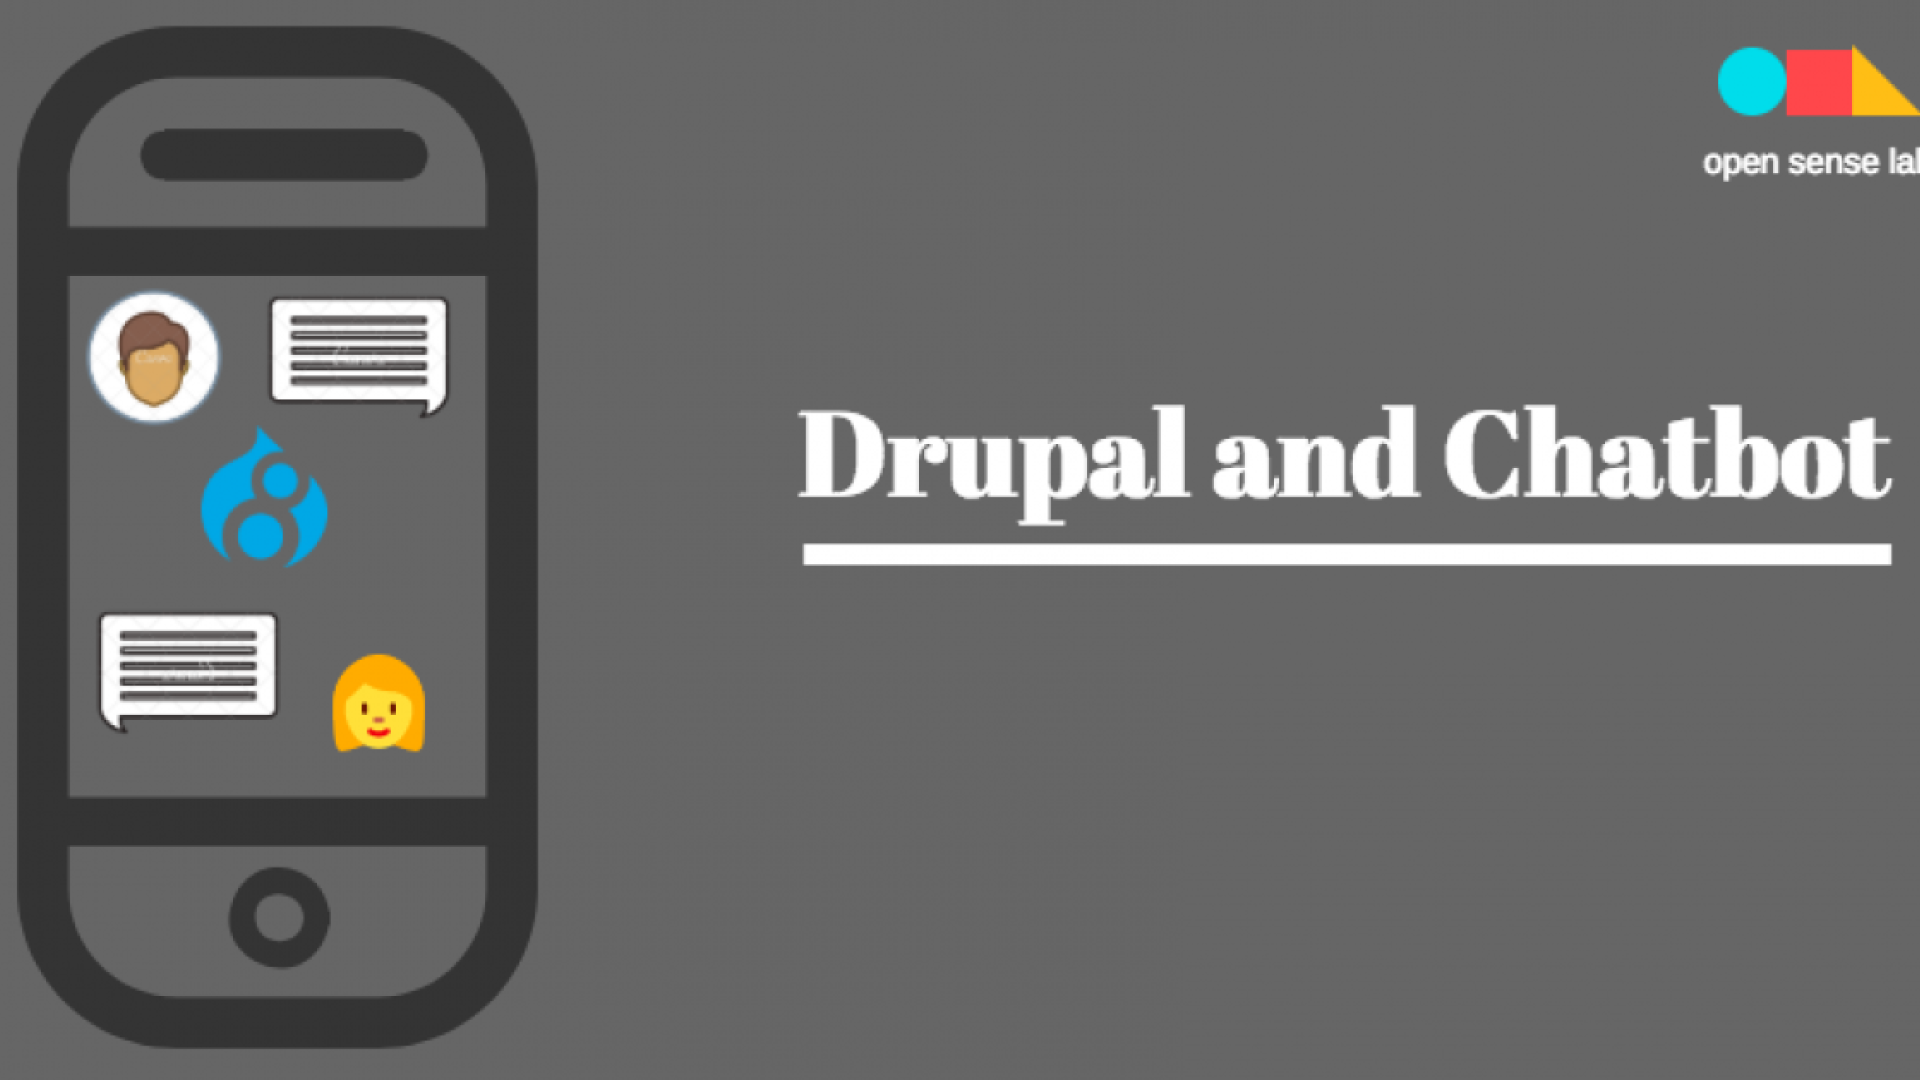 Drupal and Chatbot